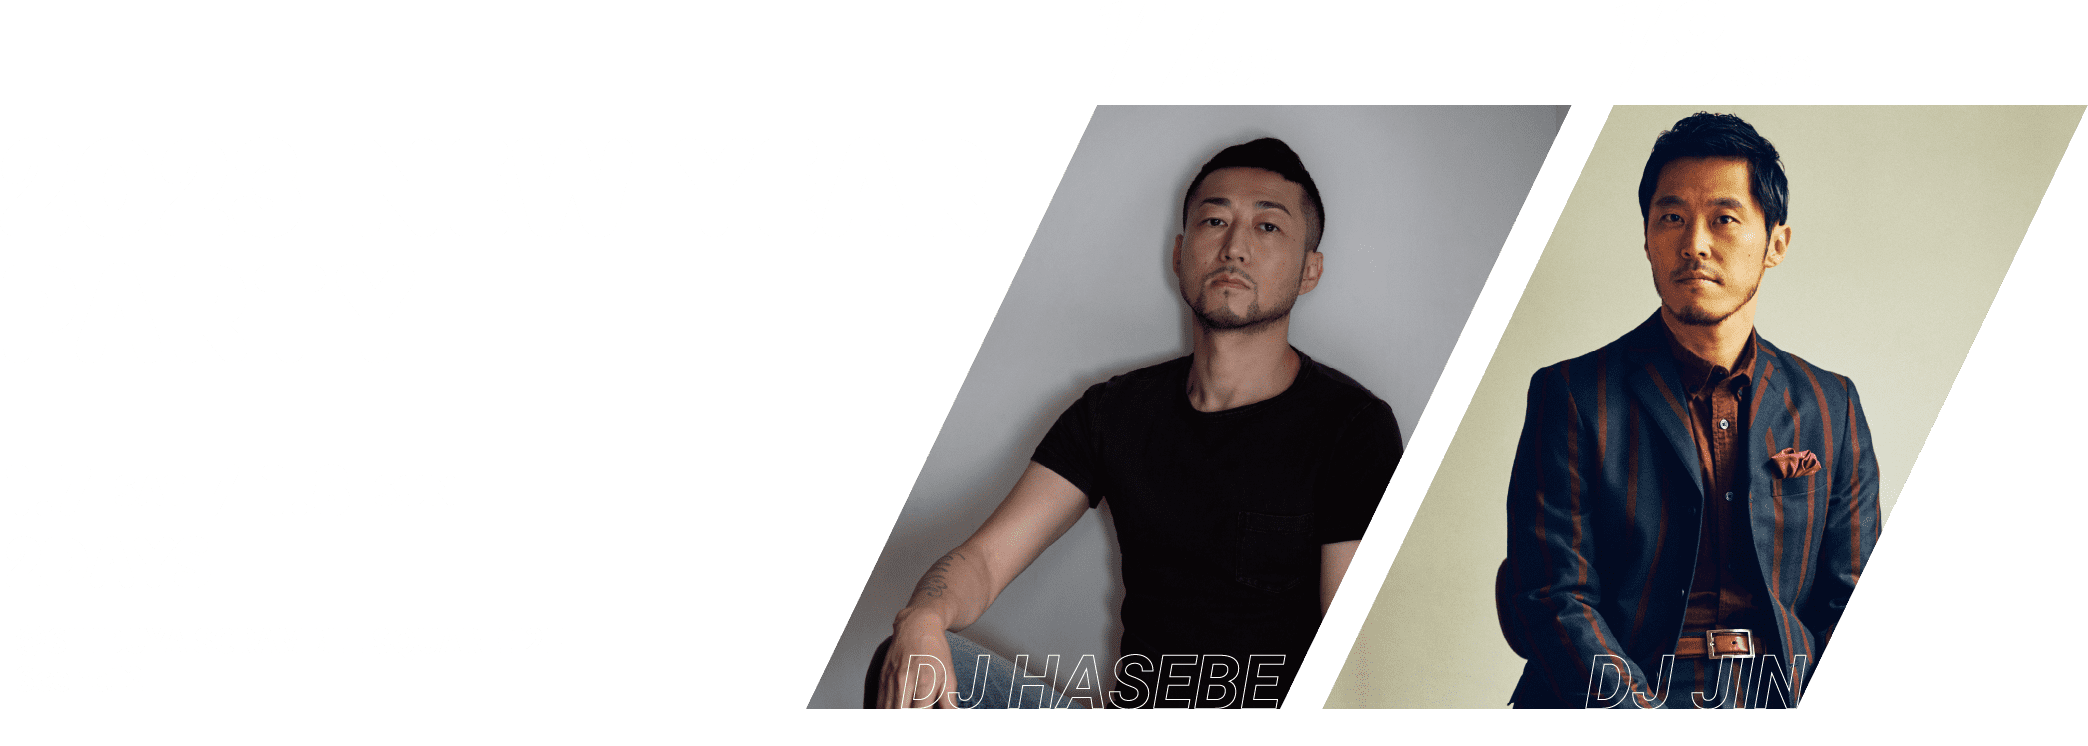 1.7 Sat DJ HASEBE 1.8 Sun DJ JIN